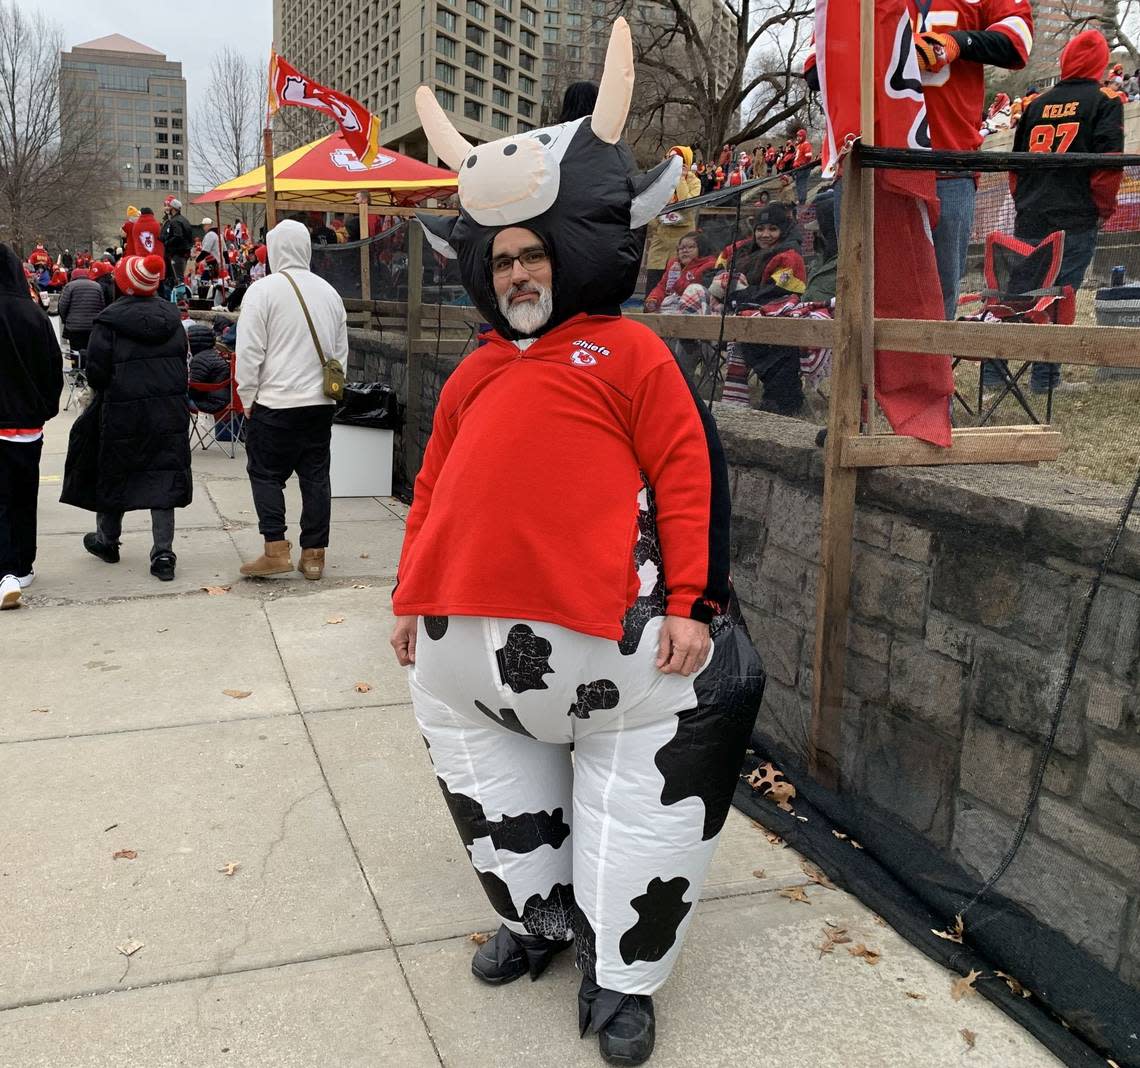 Manuel Palacio figured that since Kansas City is a cow town, he’d dress the part.